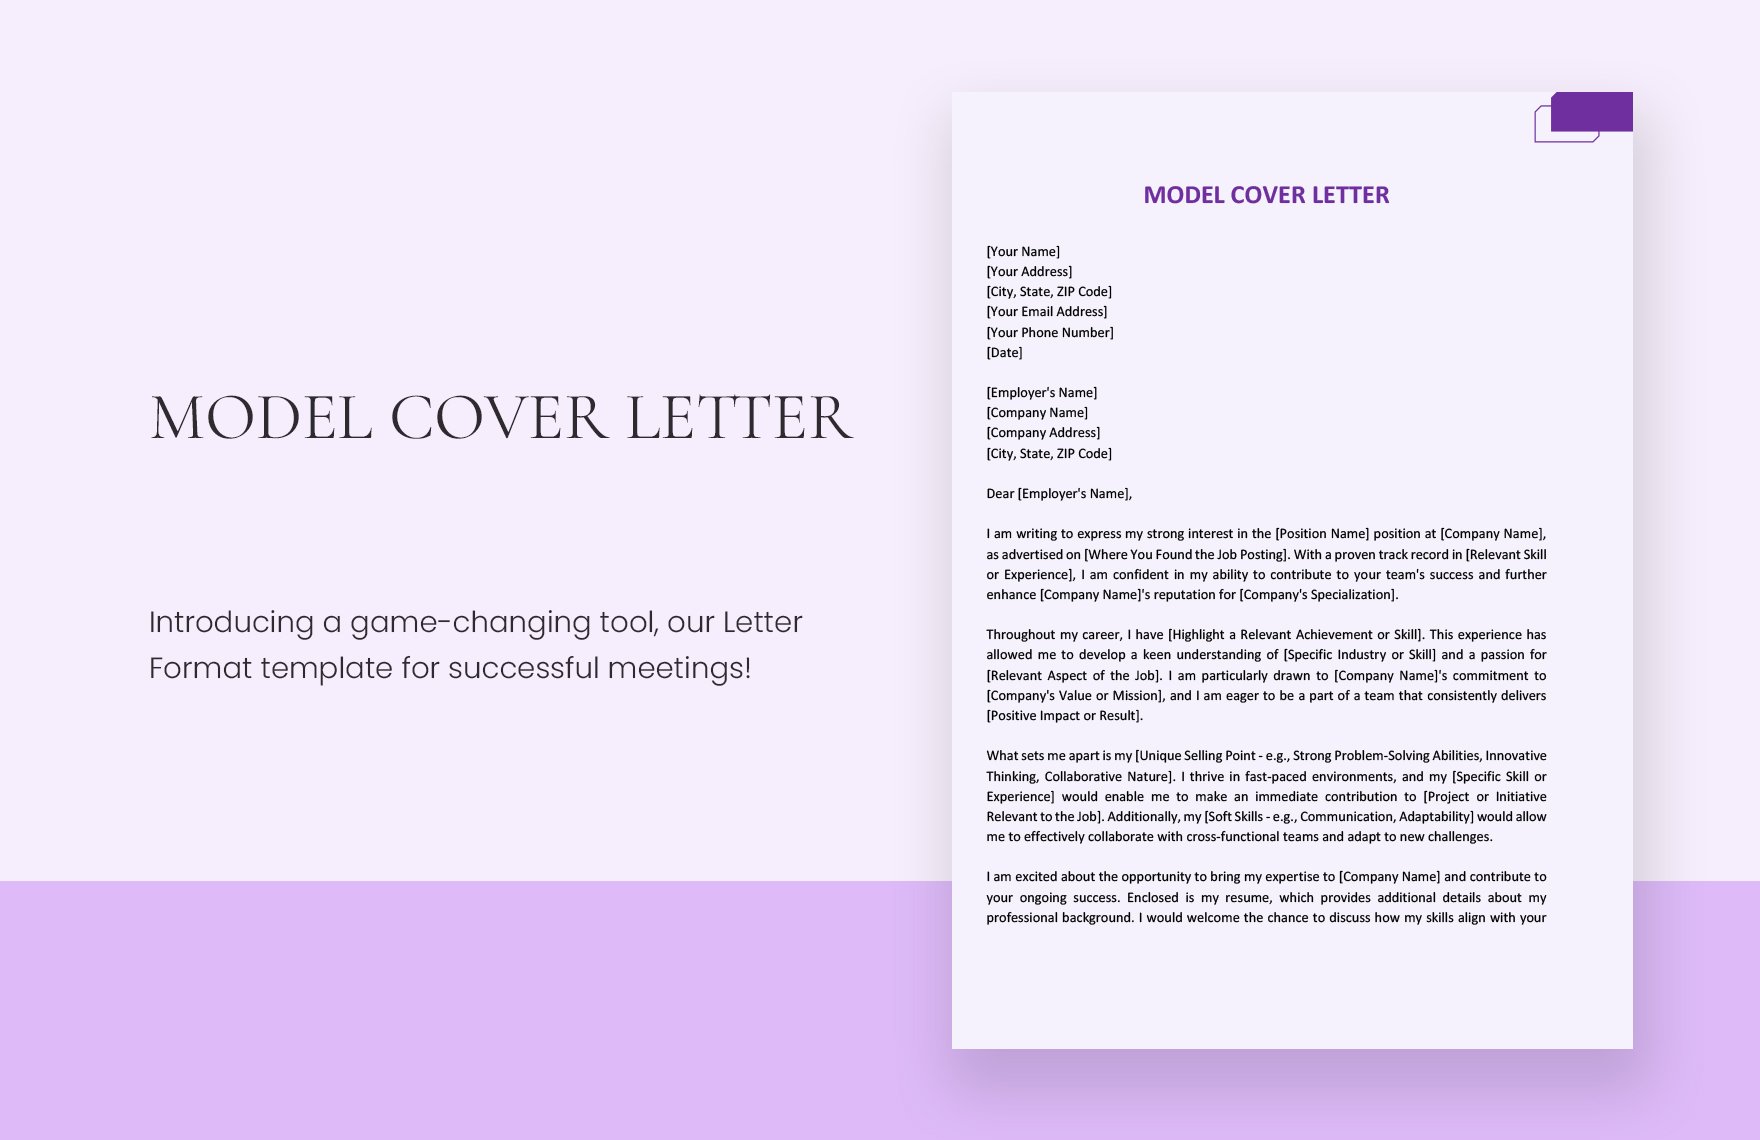 Model Cover Letter in Word, Google Docs, PDF